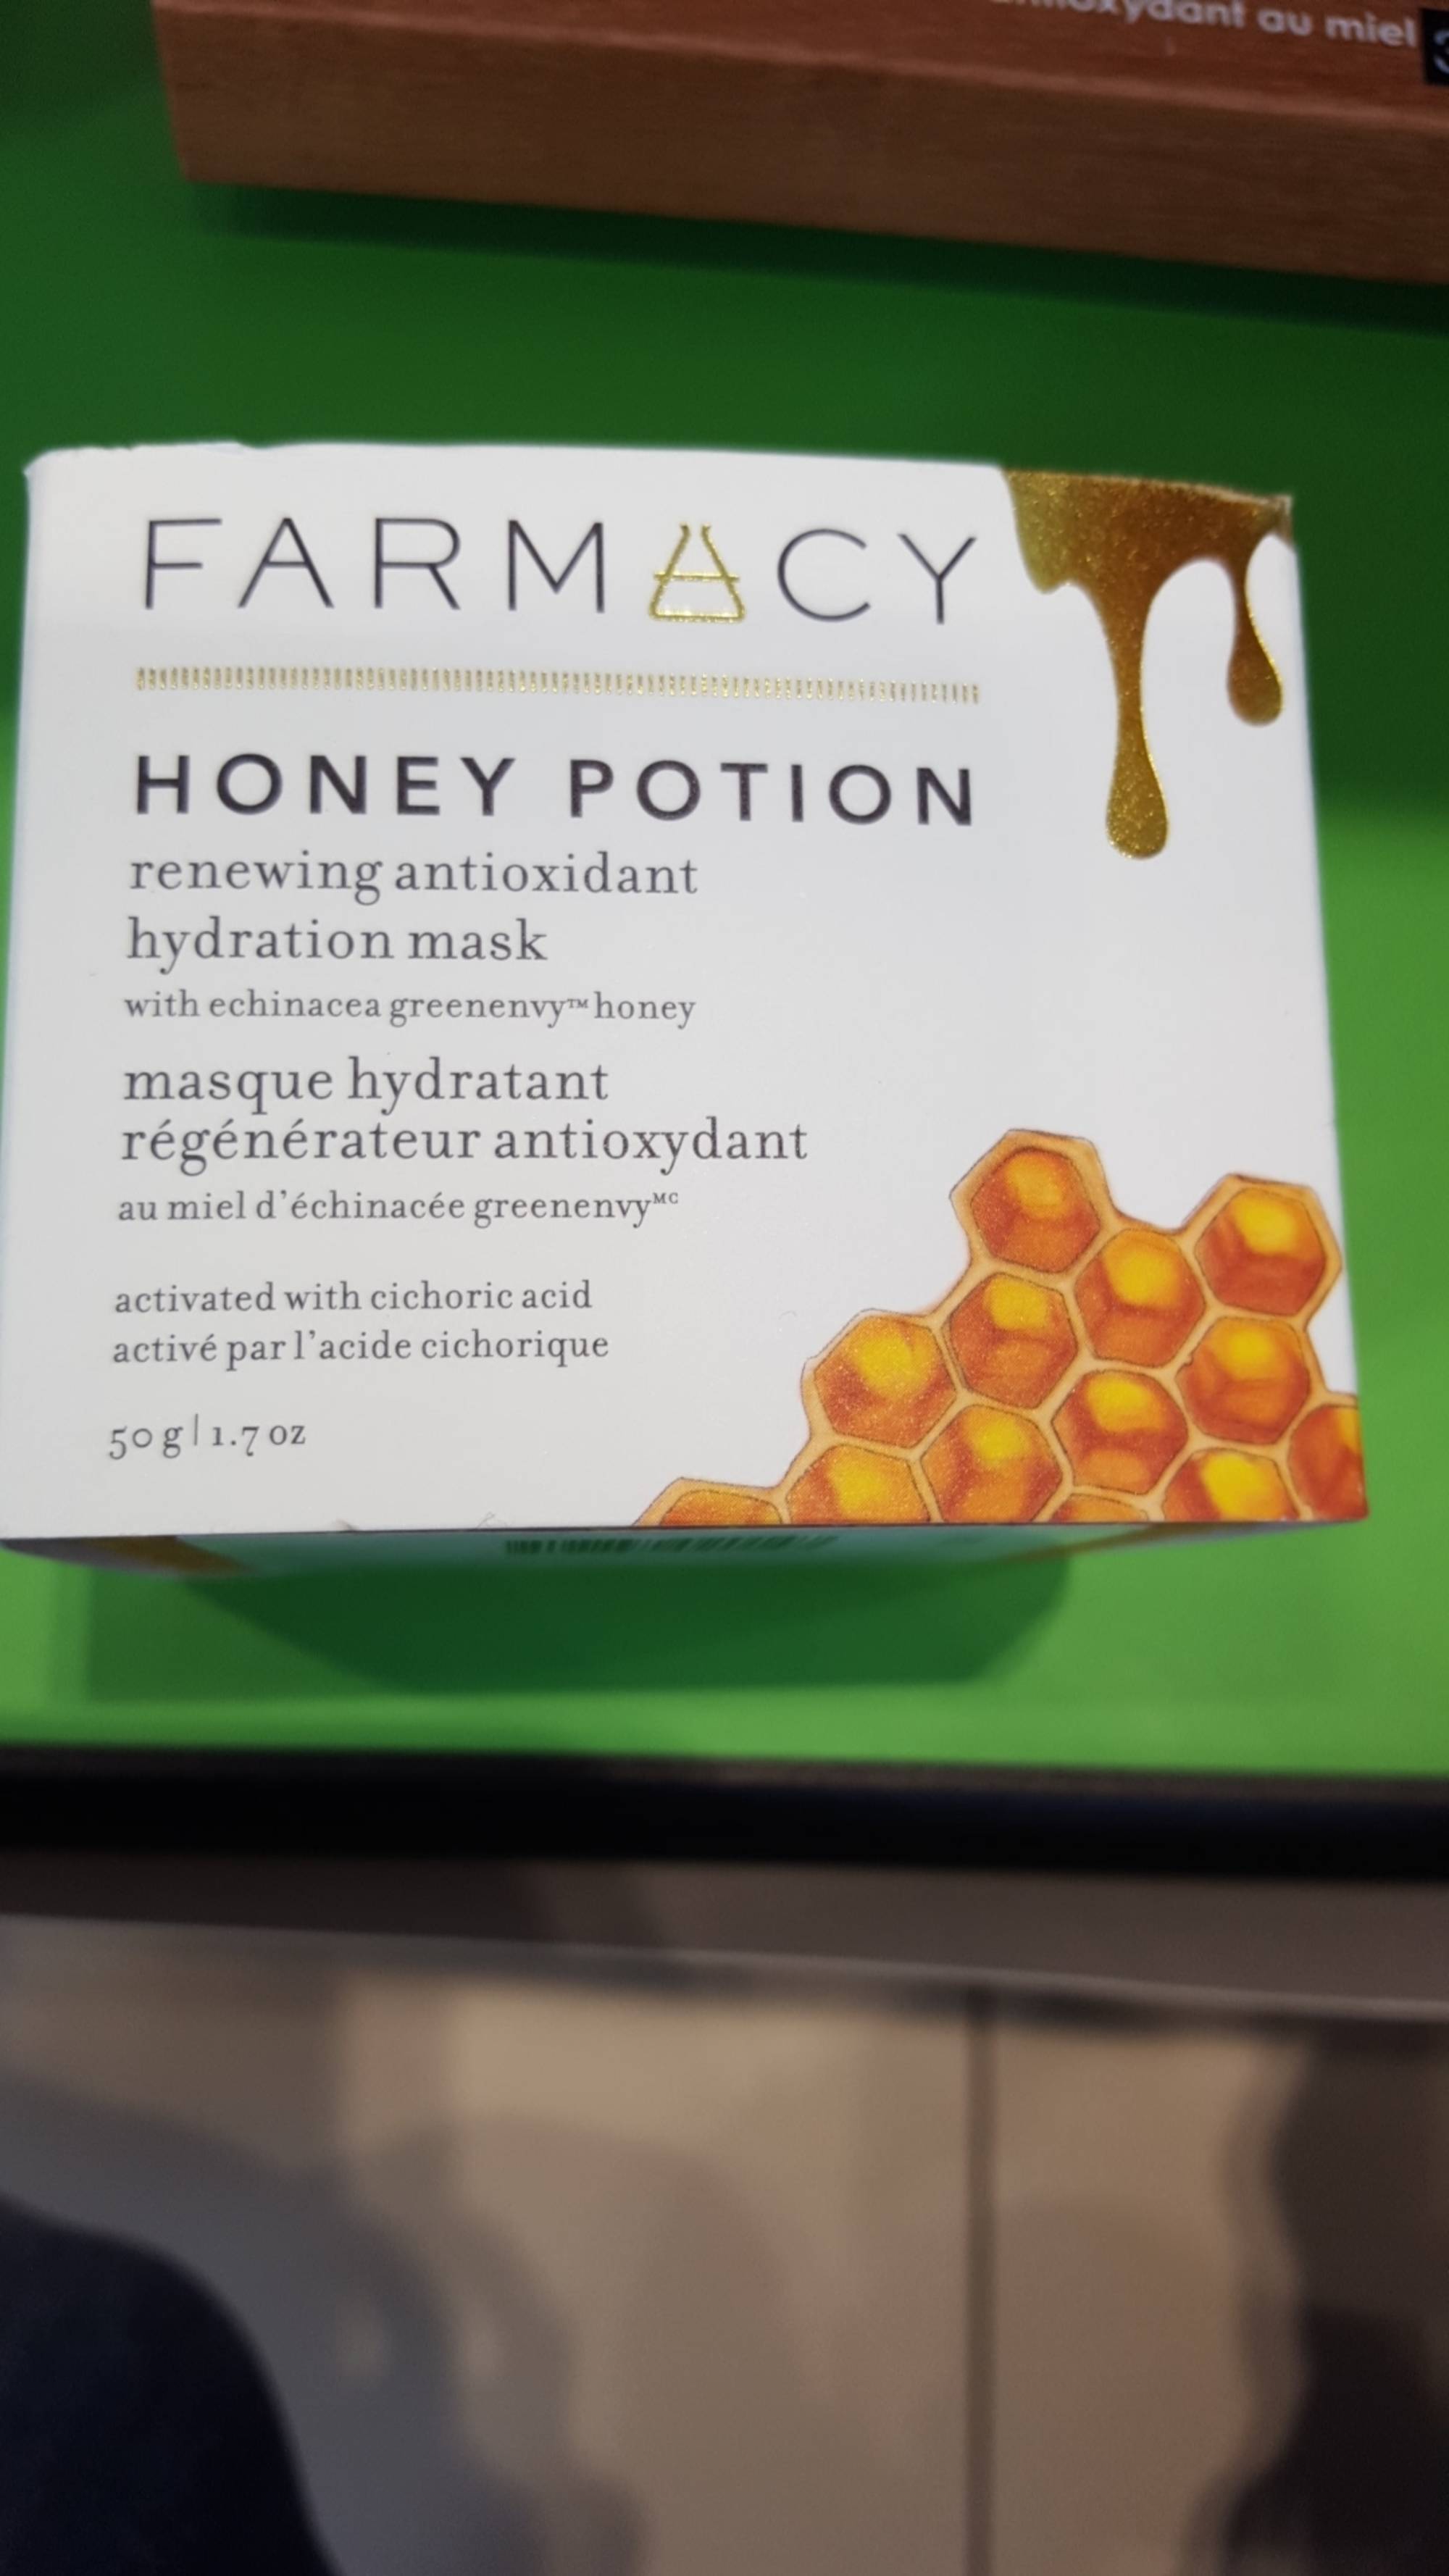 FARMACY - Honey potion - Masque hydratant régénérateur antioxydant